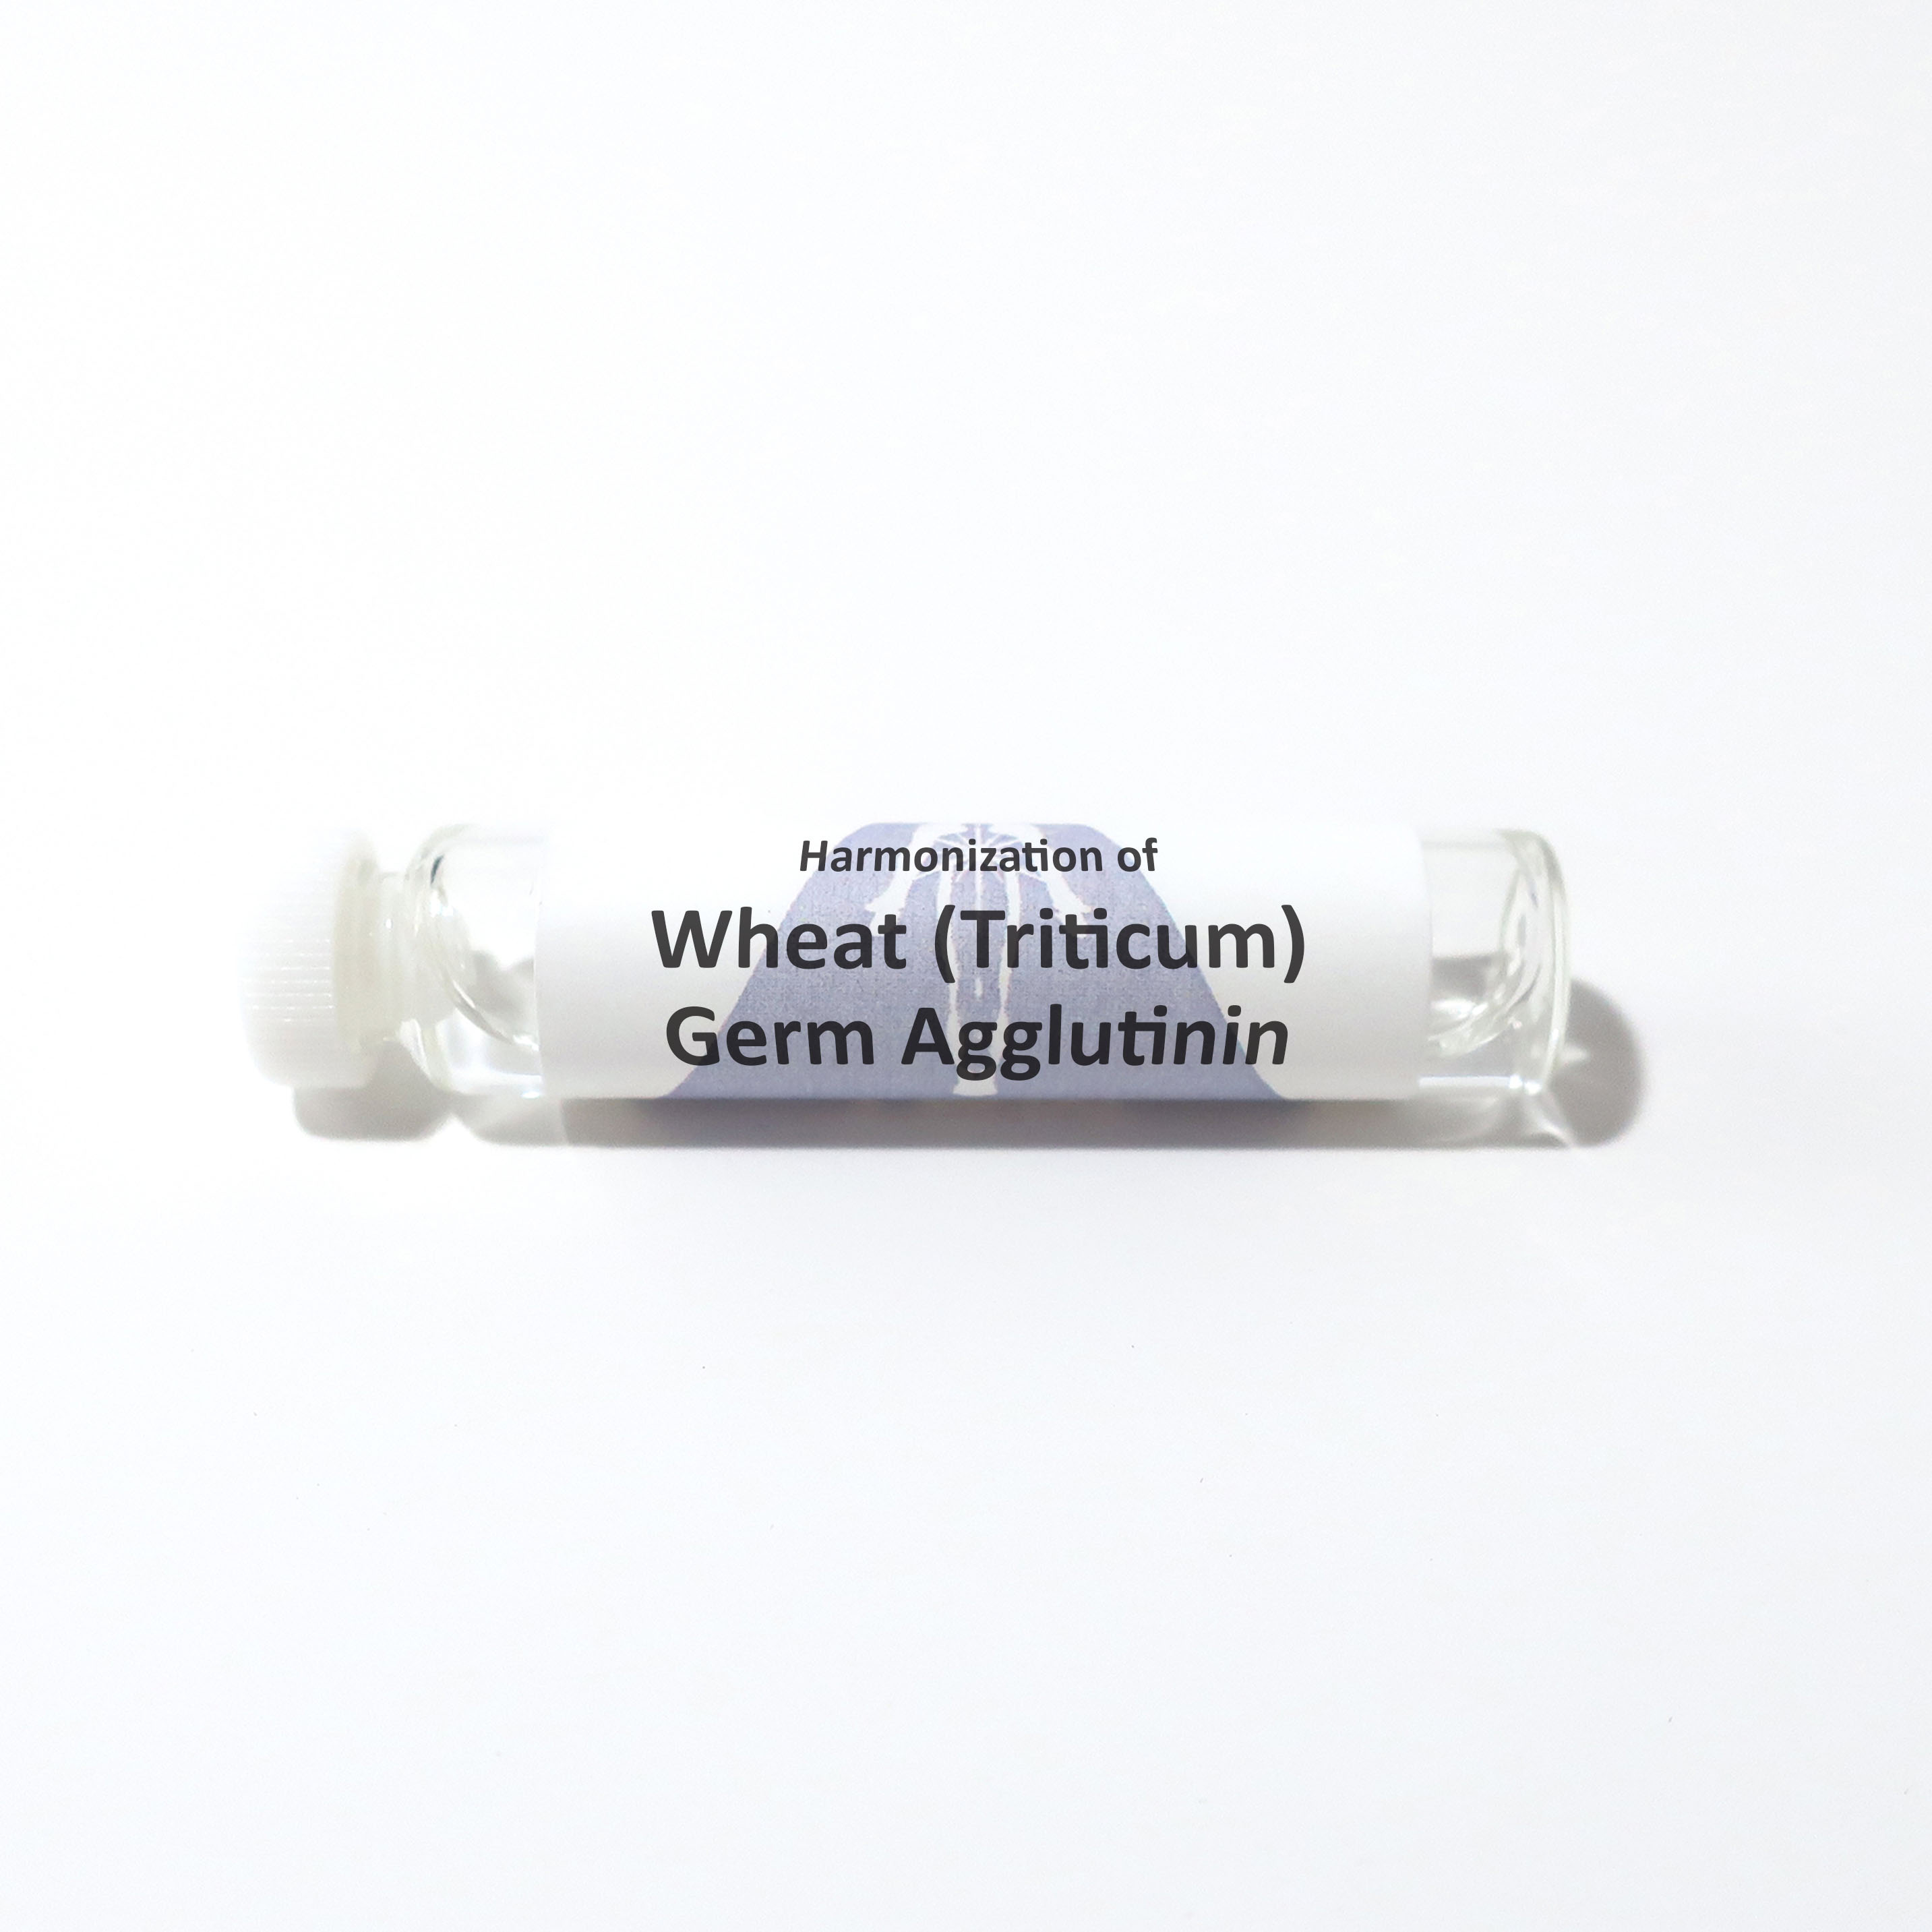 Wheat (Triticum) Germ Agglutinin